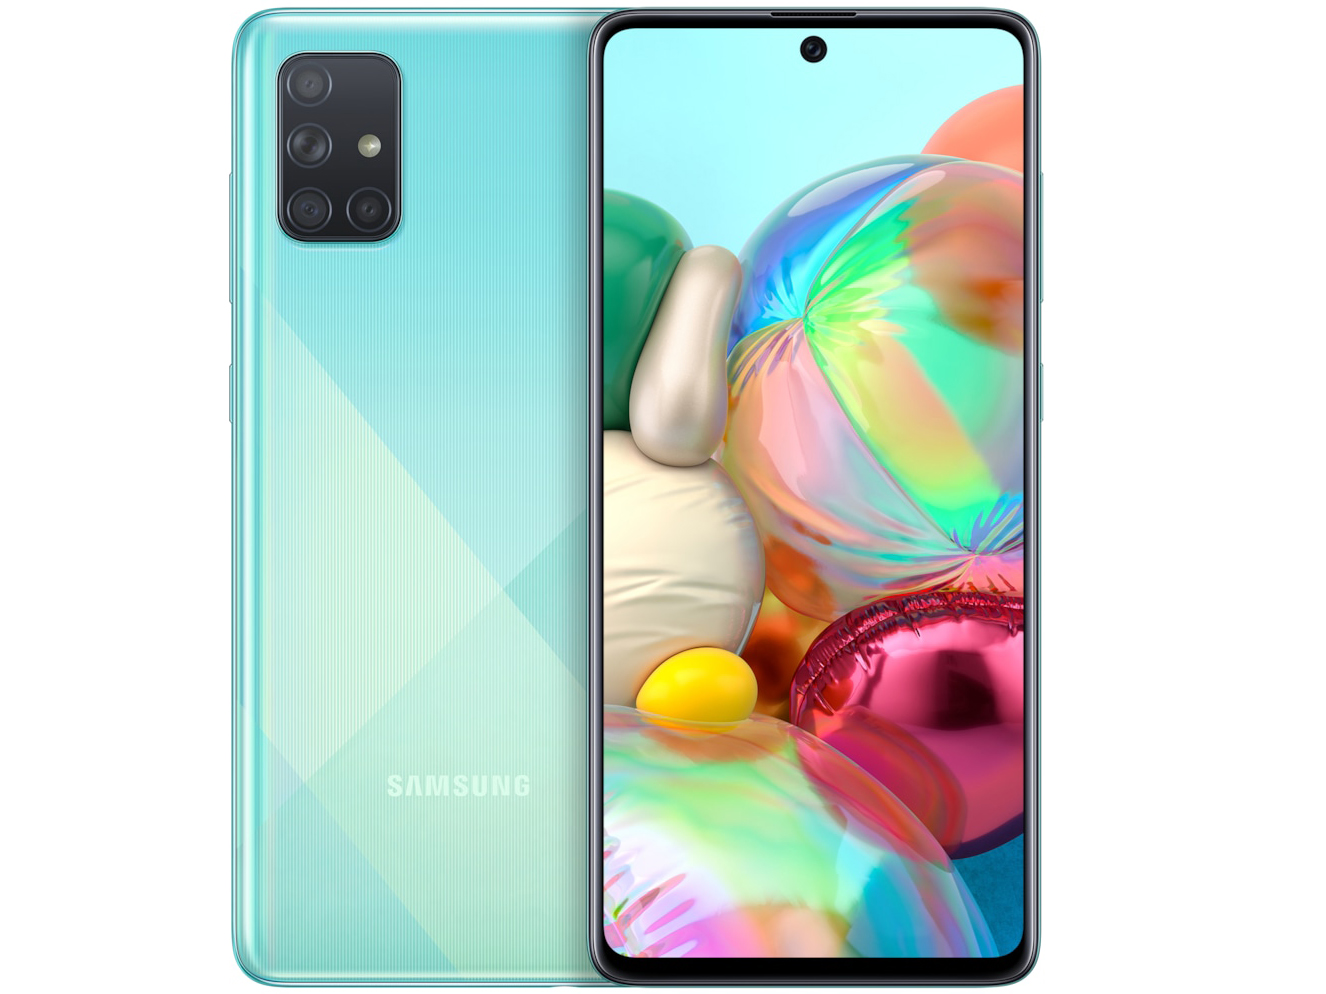 Samsung Galaxy S22 FE concept renders emerged - Sammy Fans